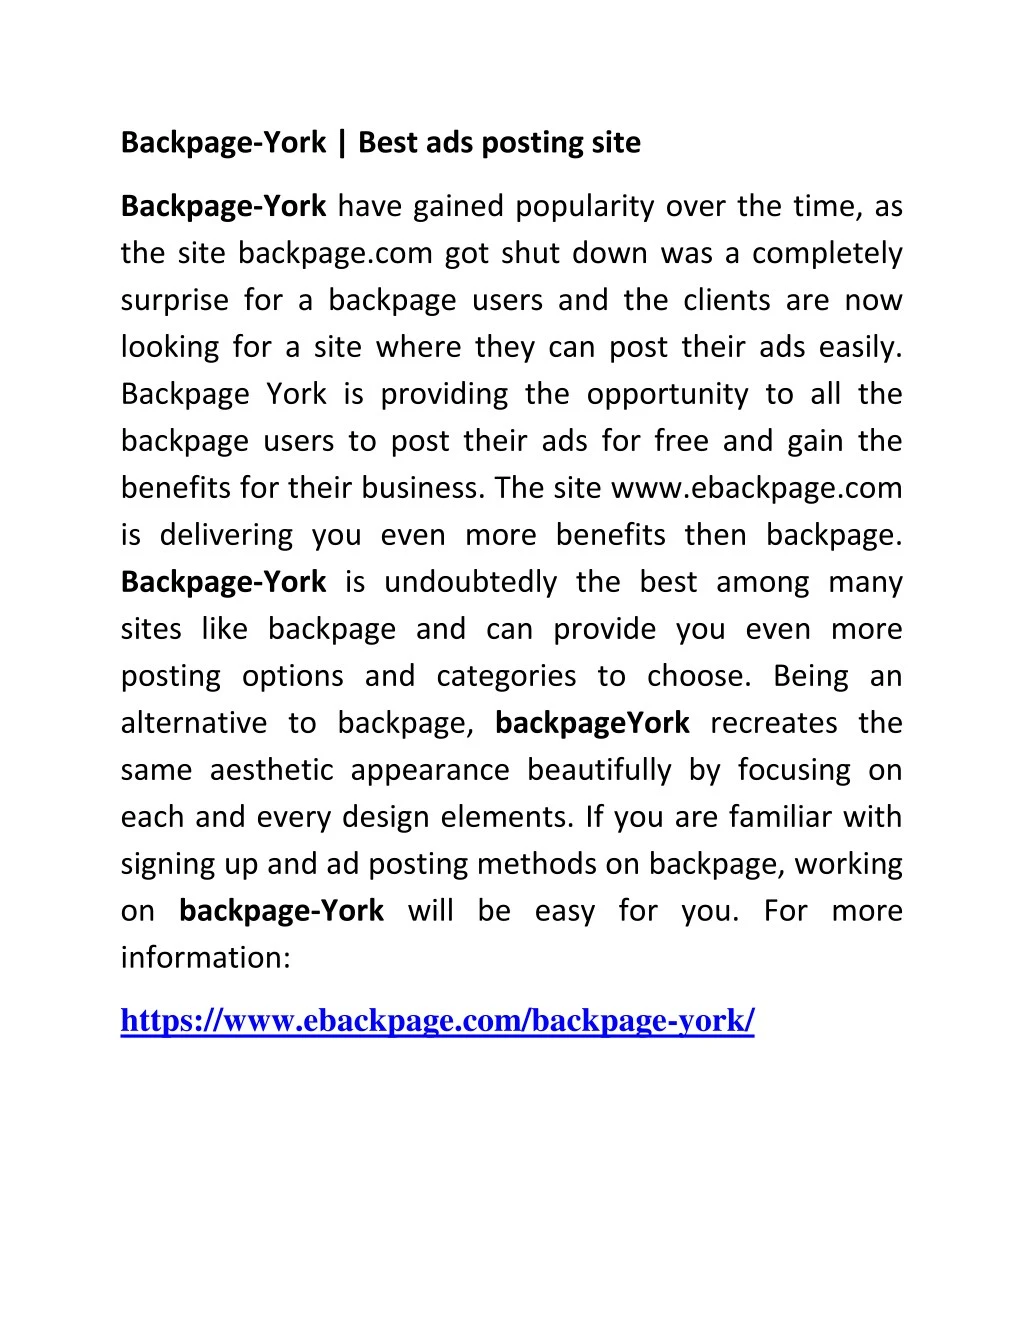 backpage york best ads posting site n.